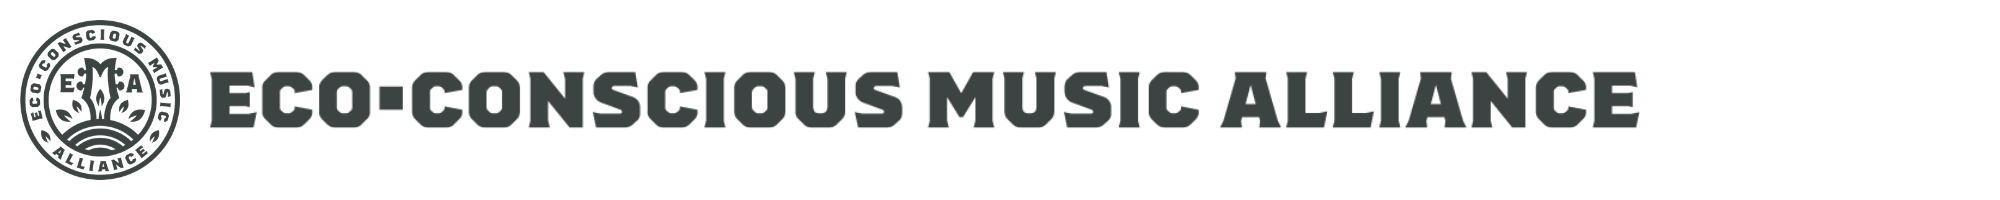 The Eco-conscious Music Alliance (EMA)